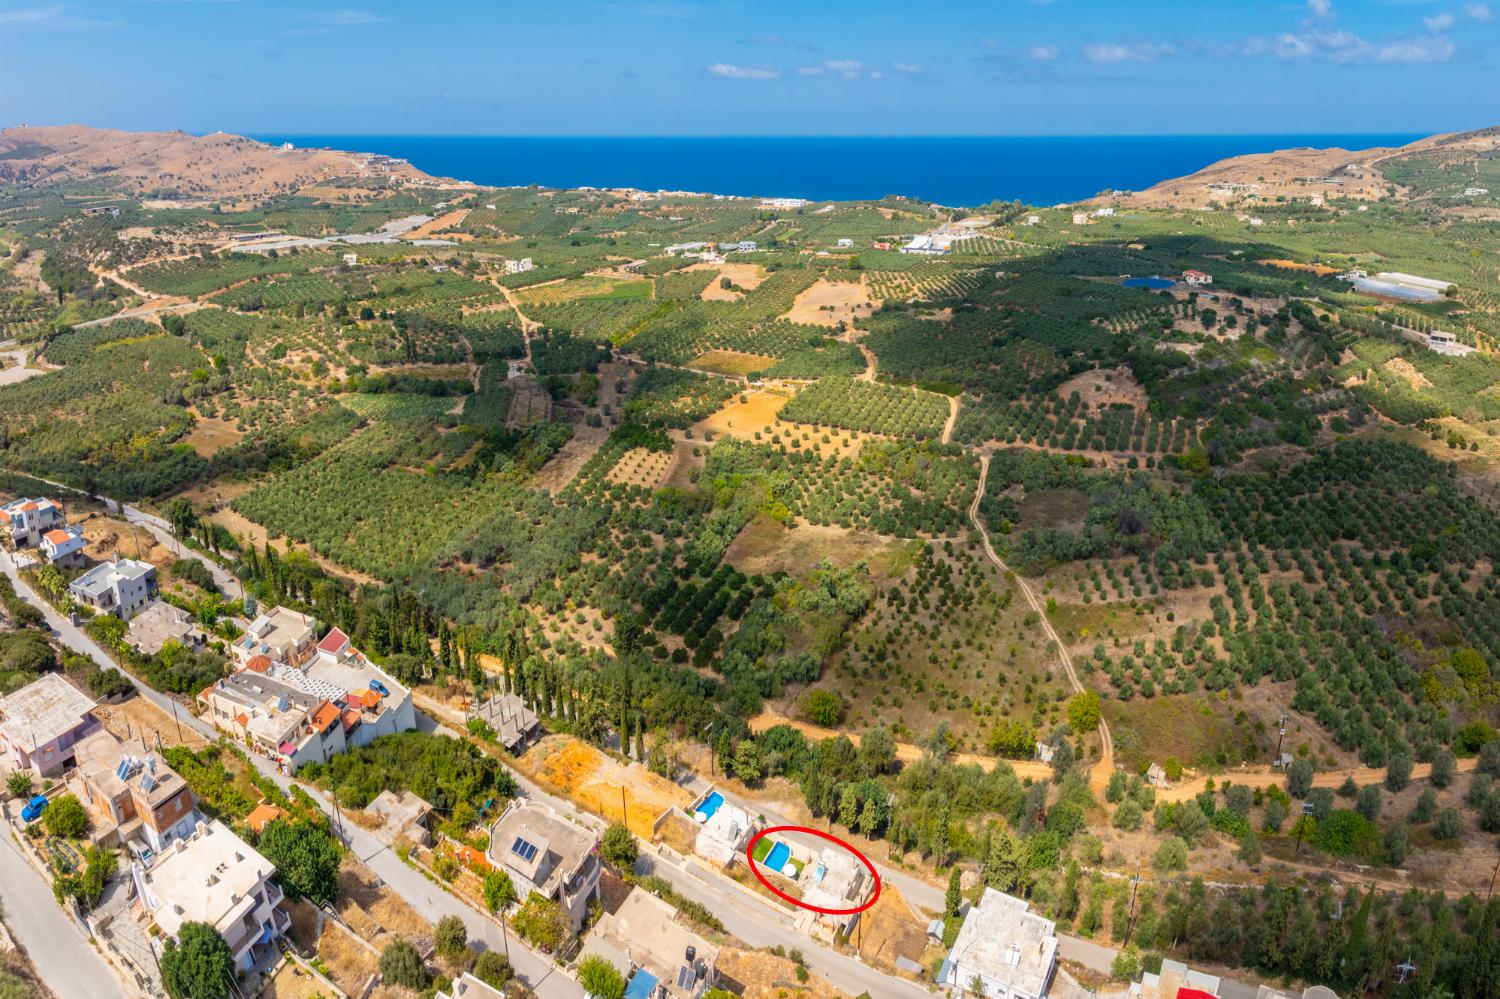 Aerial view showing location of Stefania Villa Ena